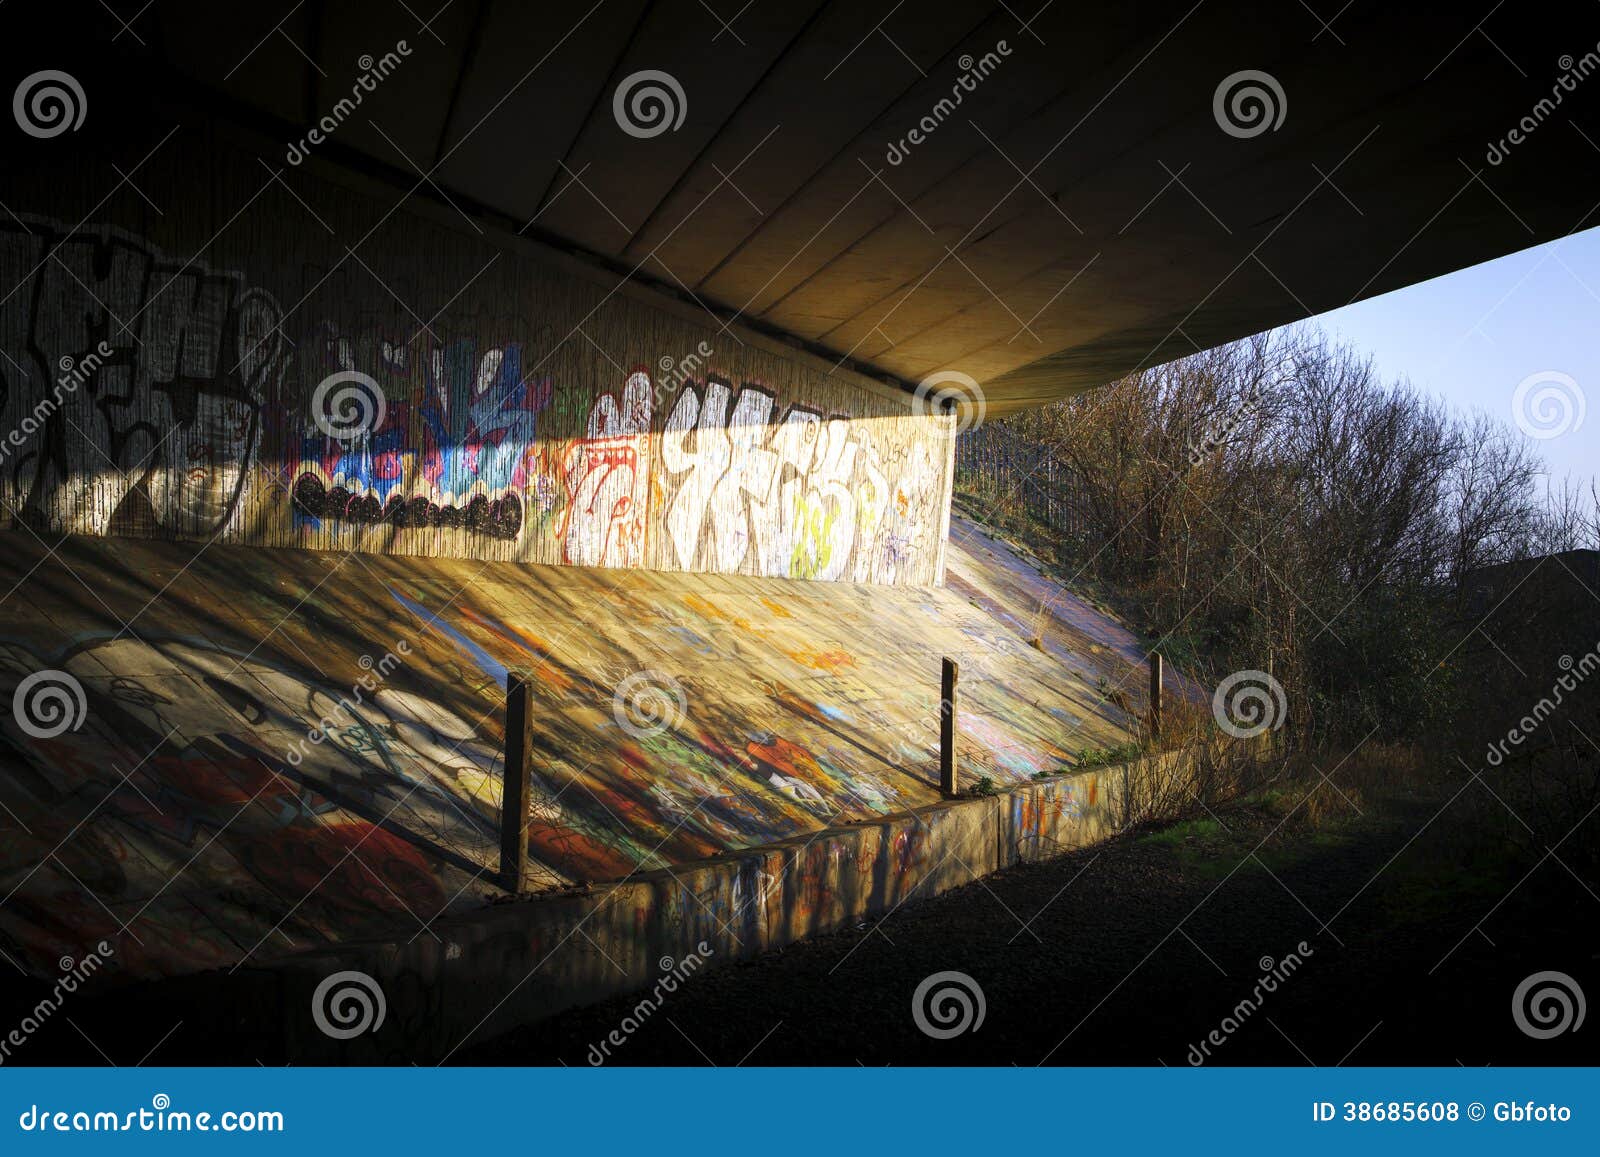 underpass graffiti